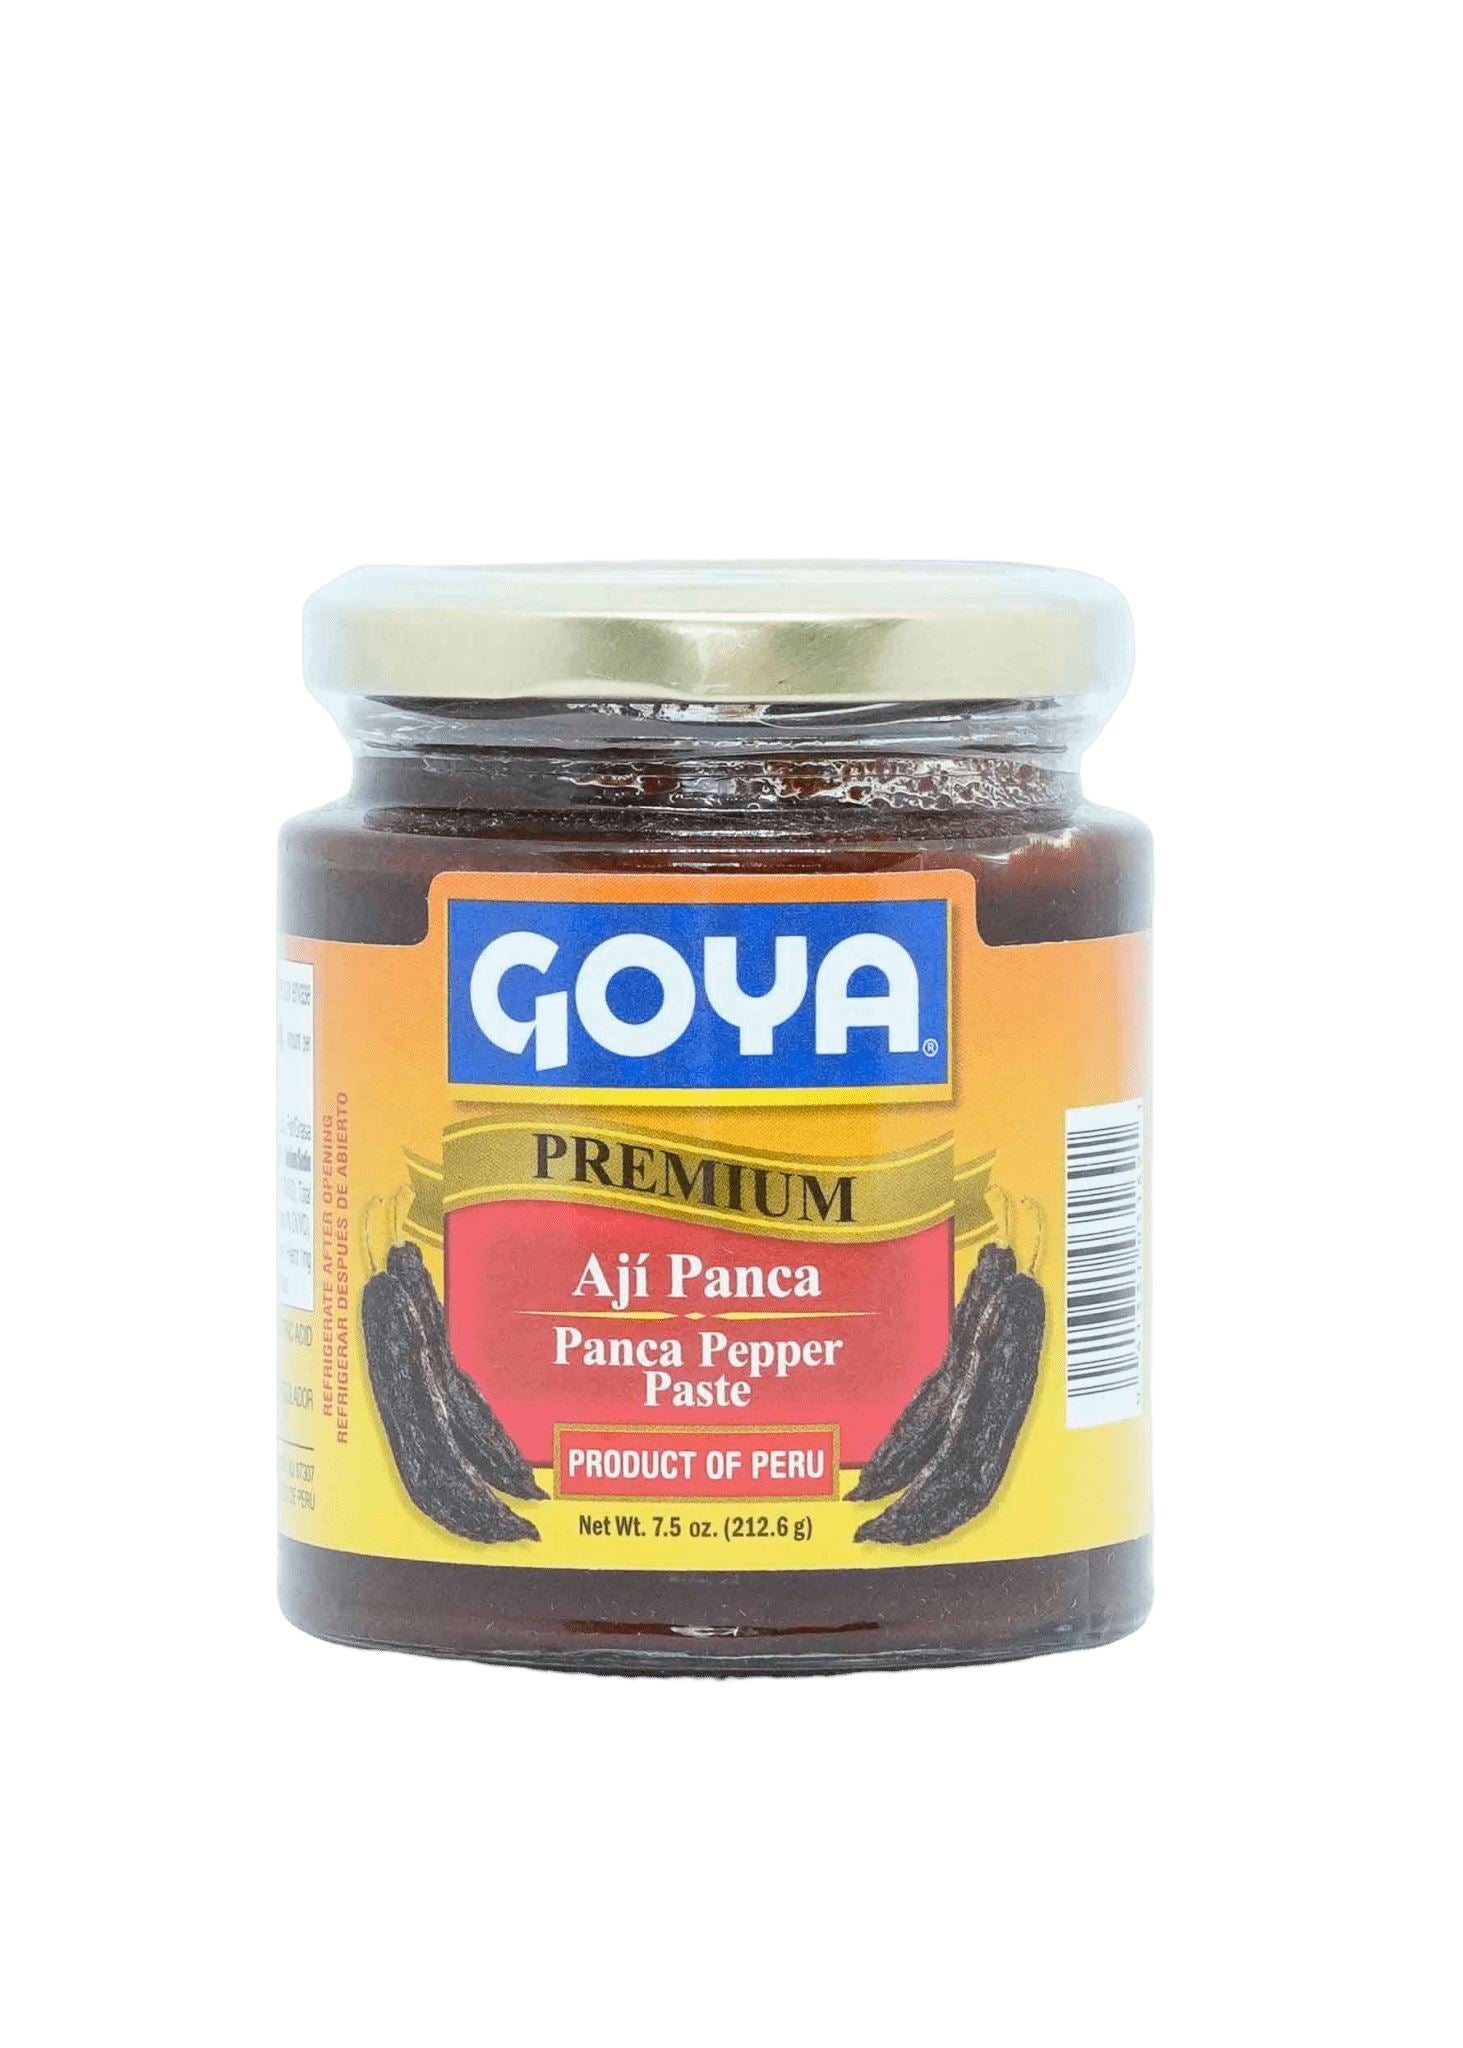 Goya Panca Pepper Paste 212g Chillies Goya 